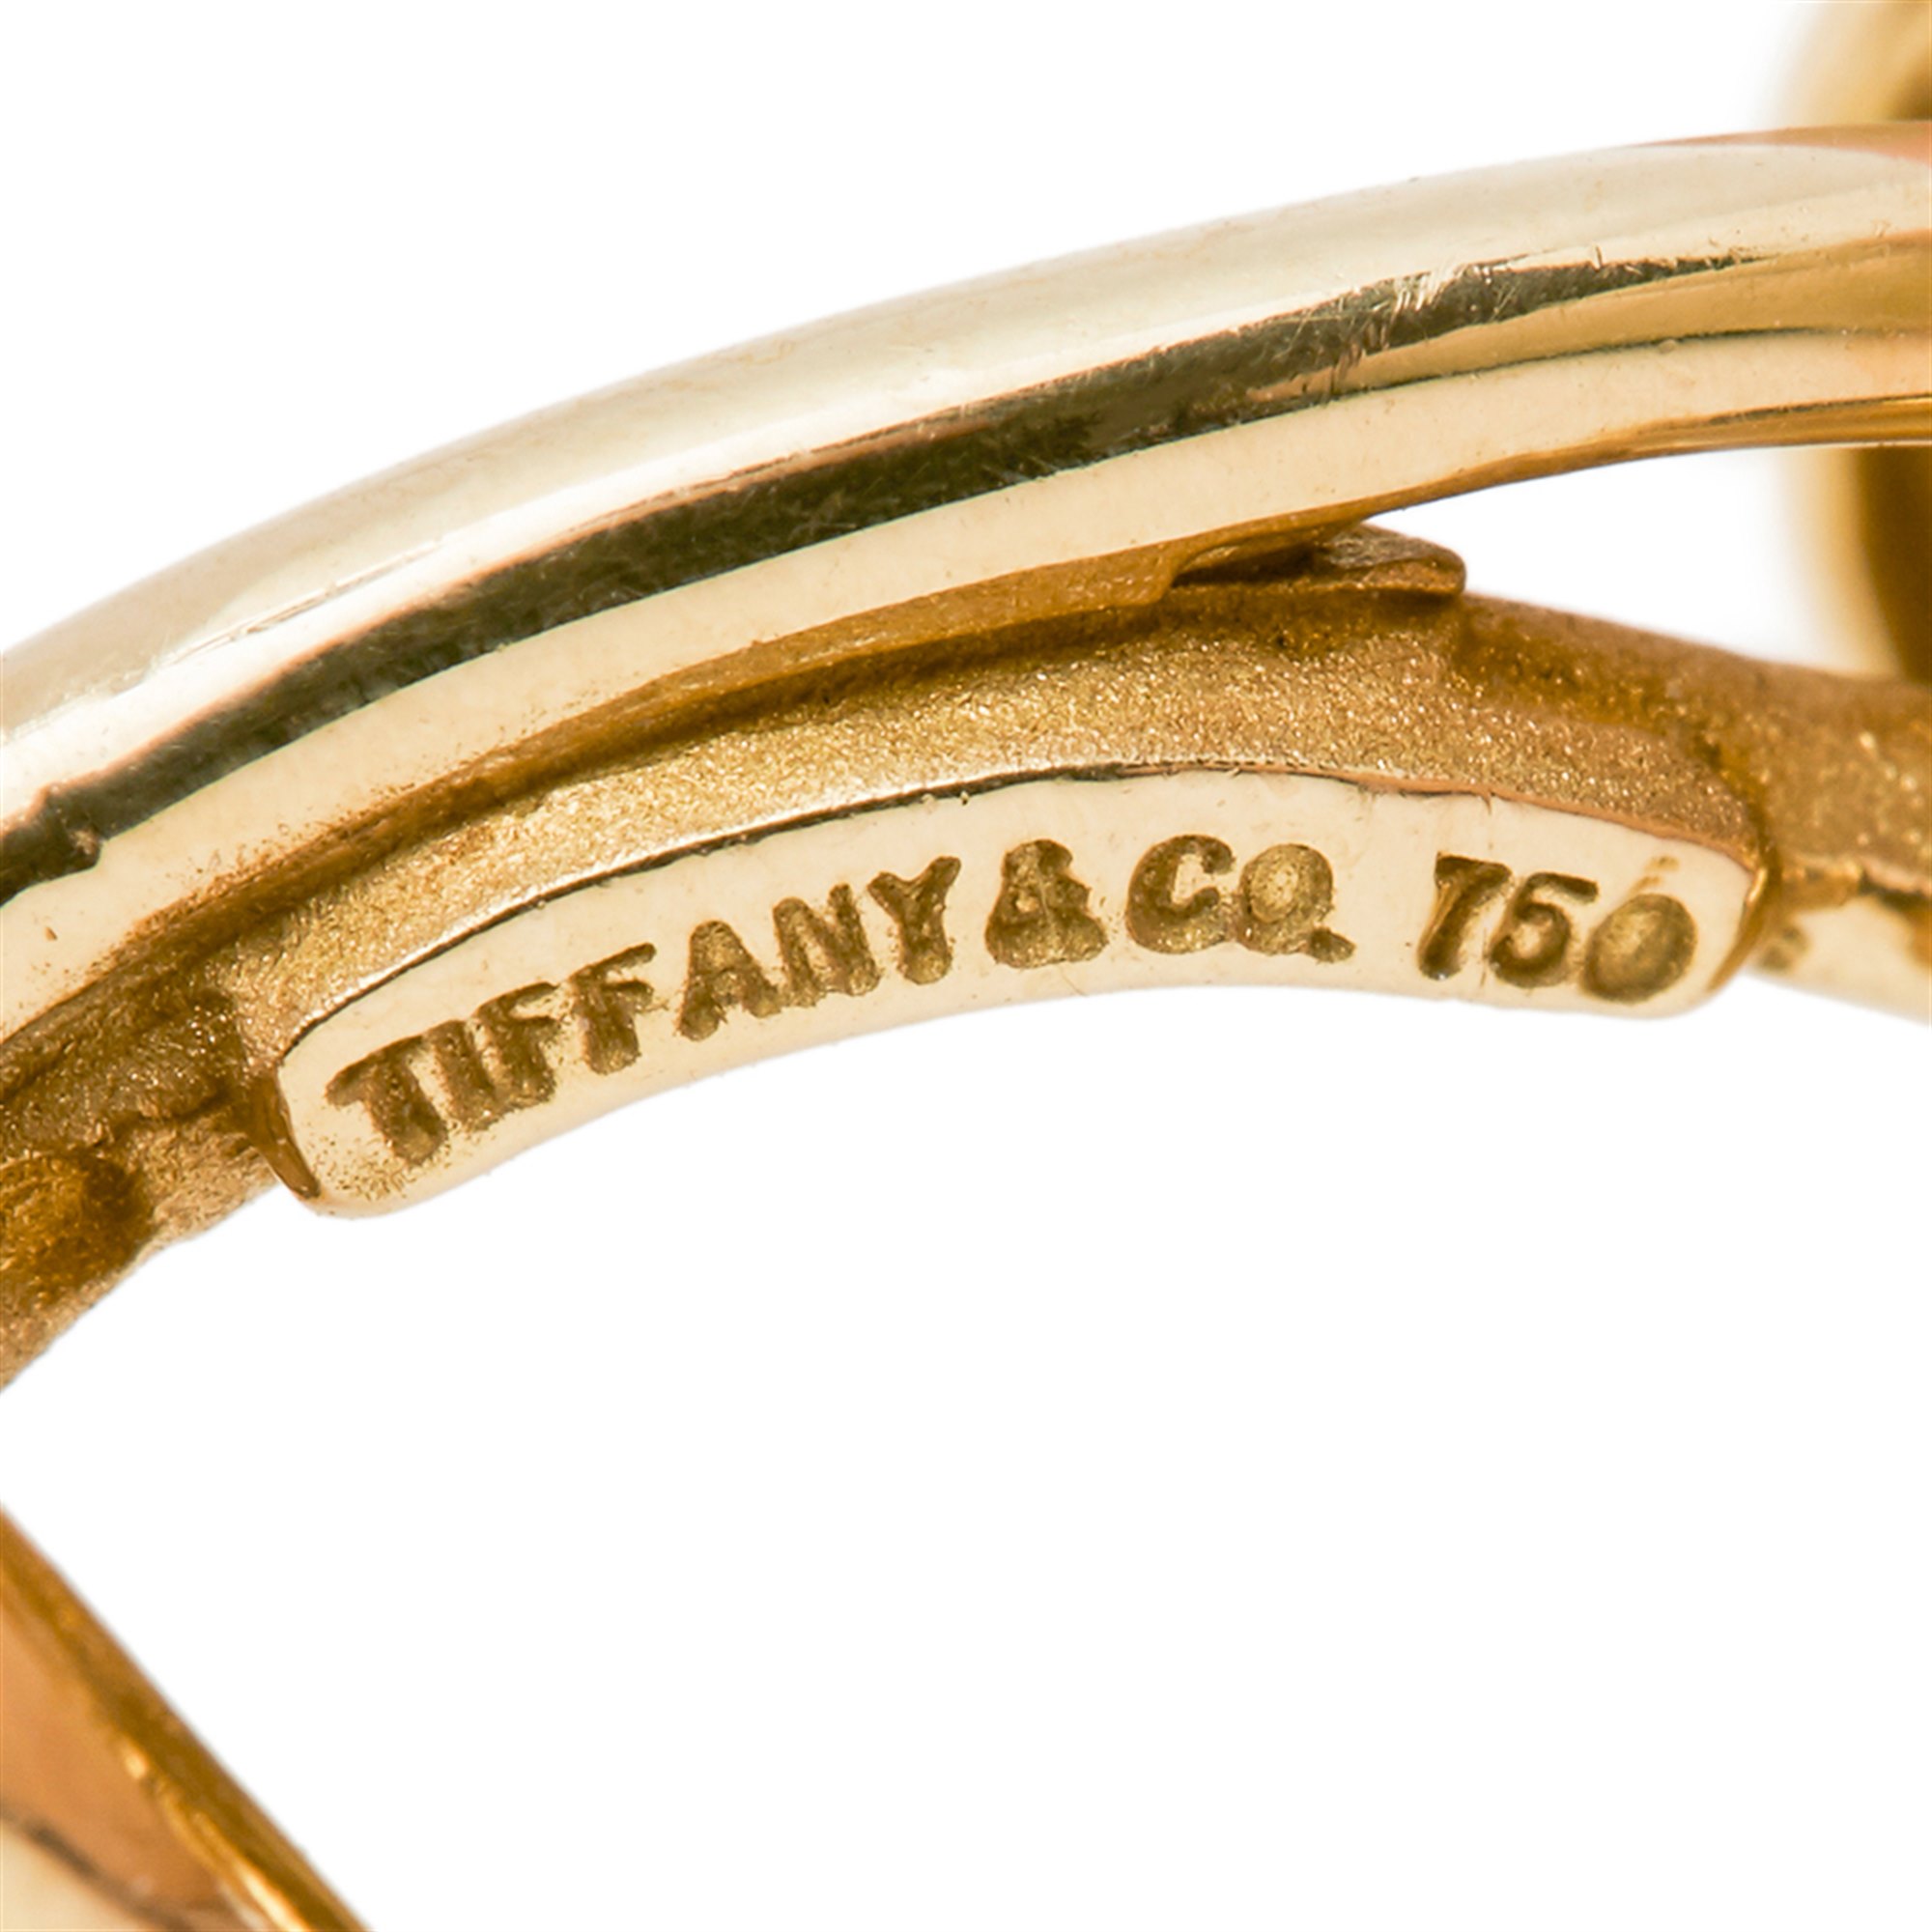 Tiffany & Co. 18k Yellow Gold Knot Cufflinks